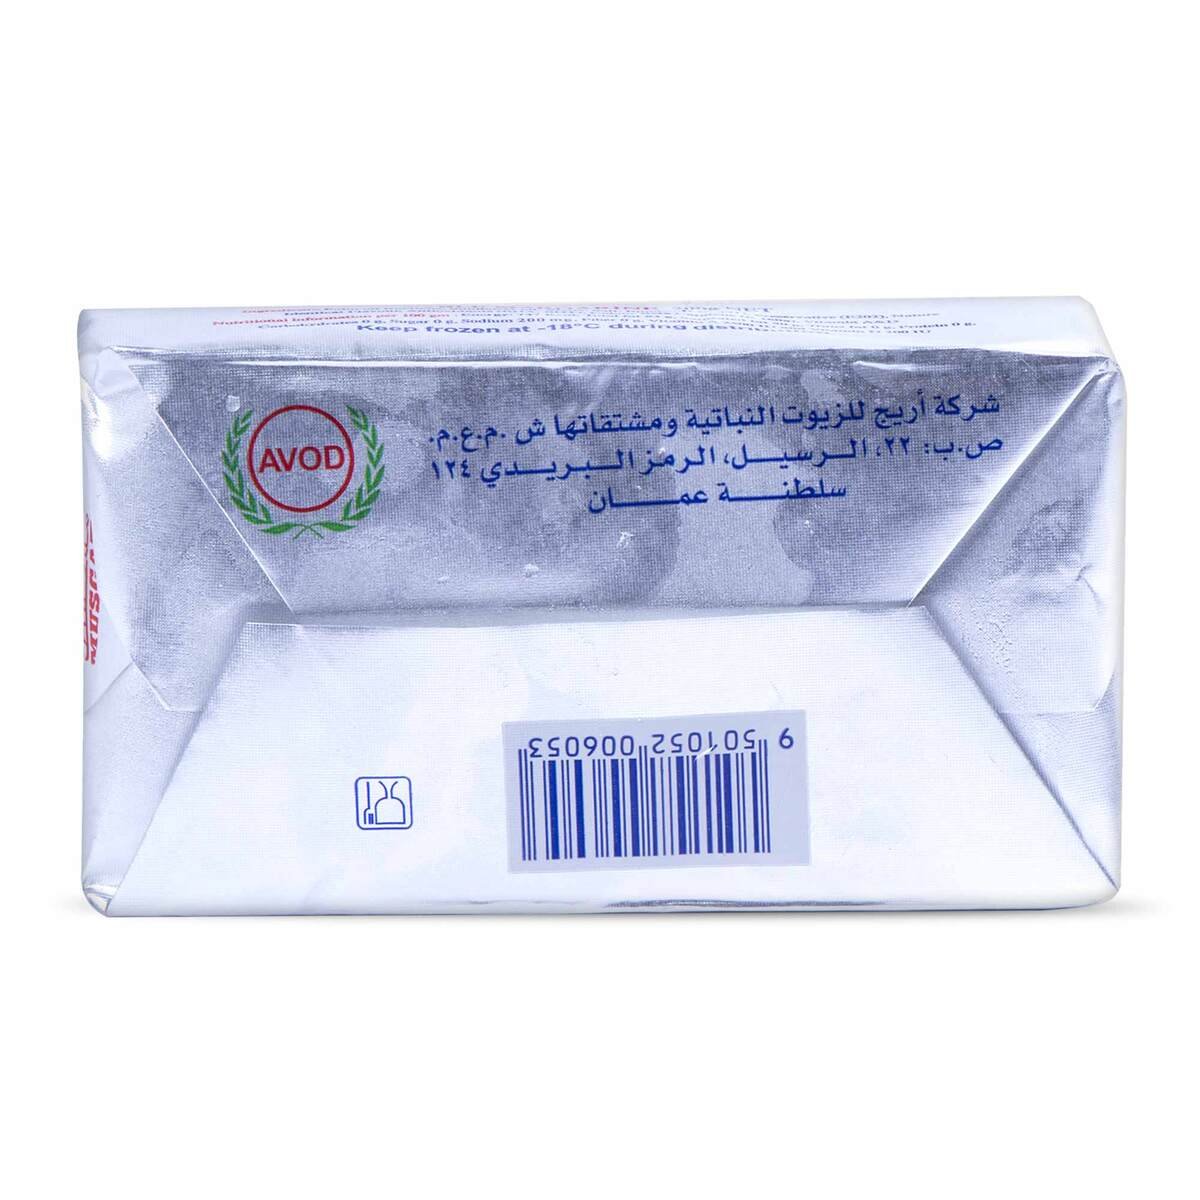 Muscat Salted Margarine 20 x 200g